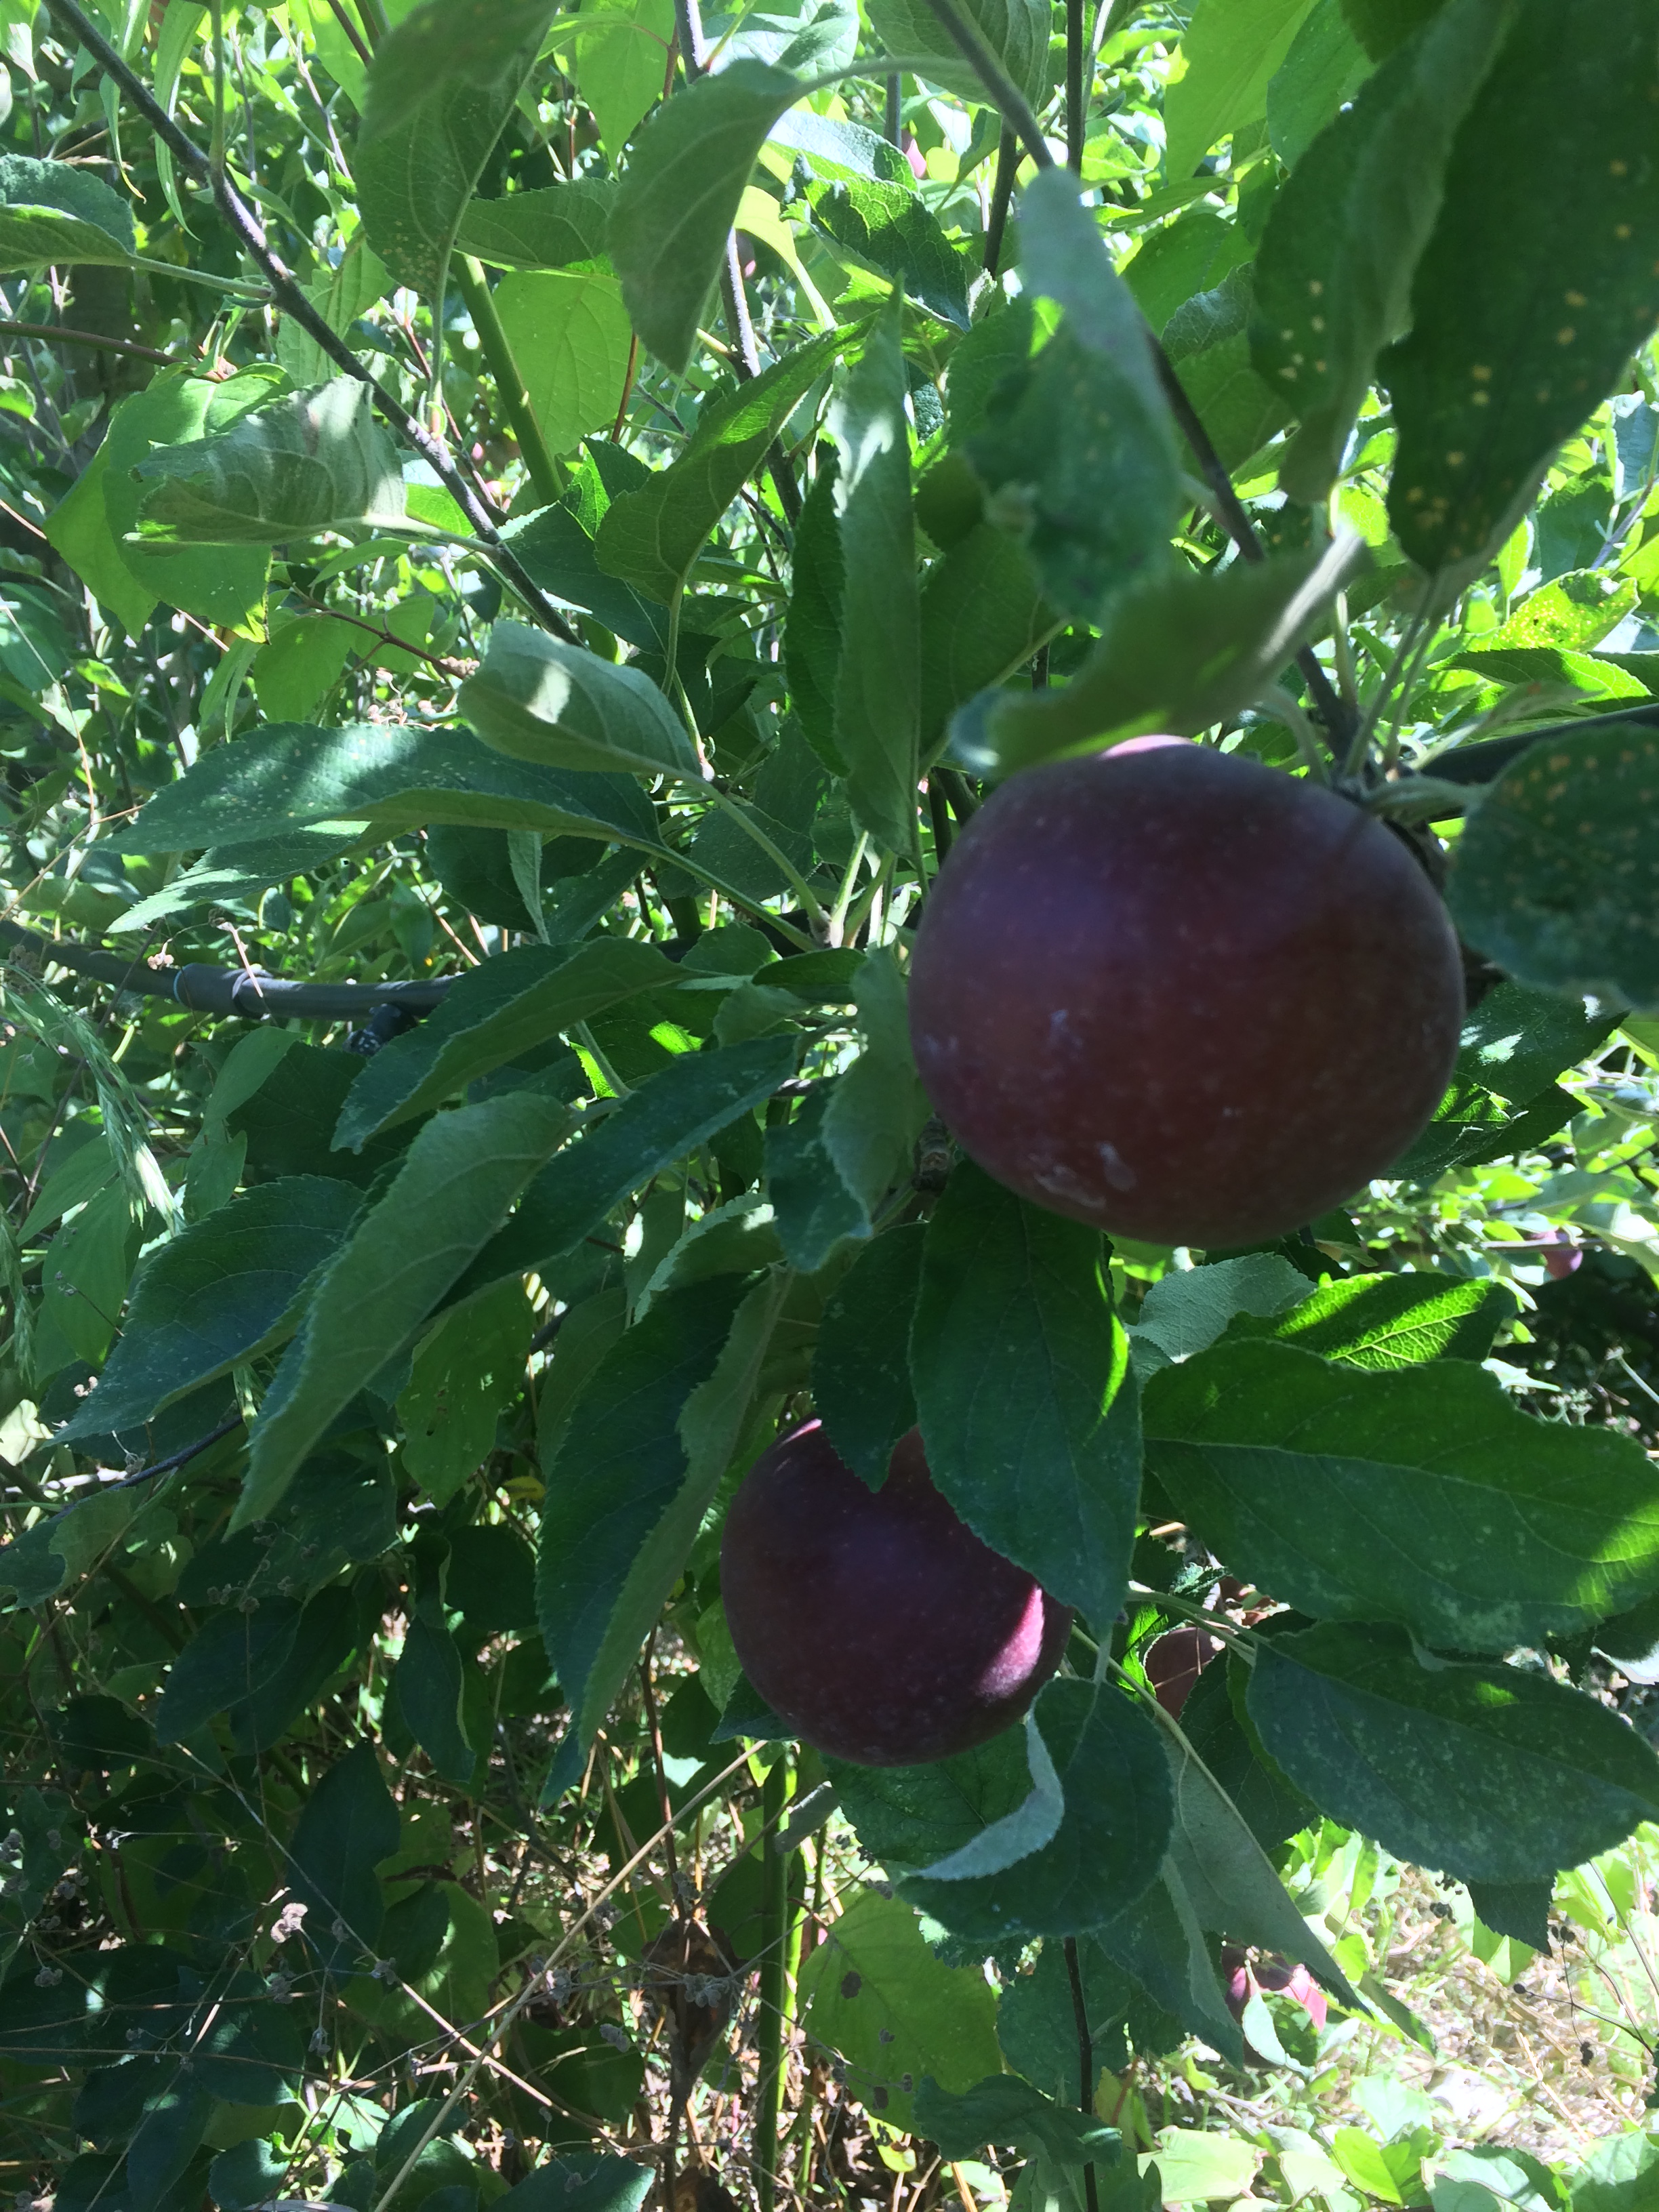 Arkansas Black apple on branch